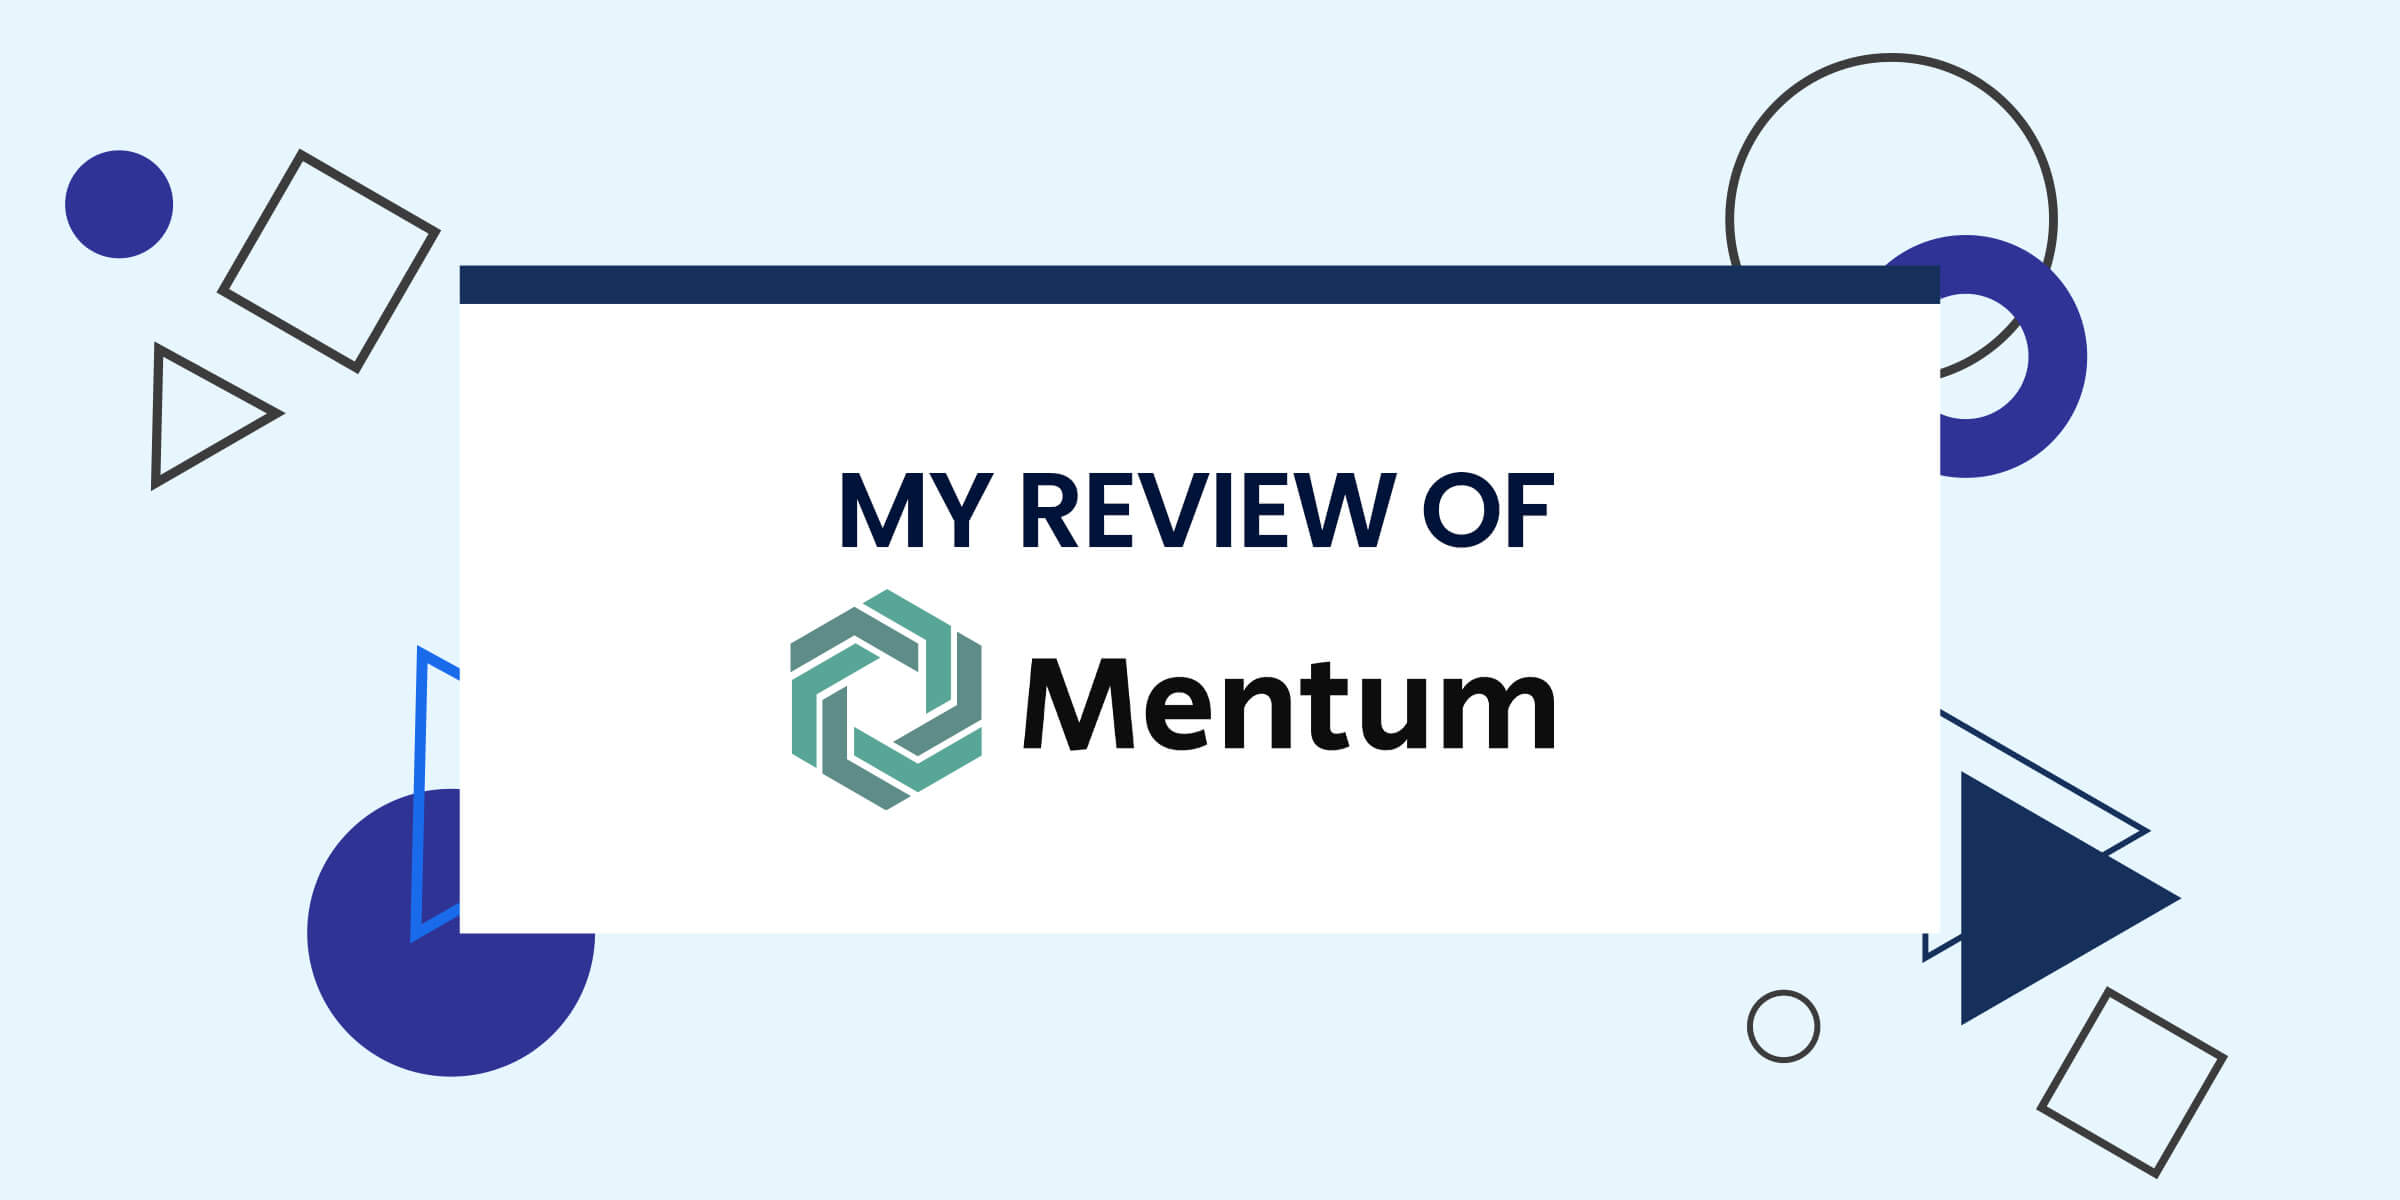 My Review of Mentum